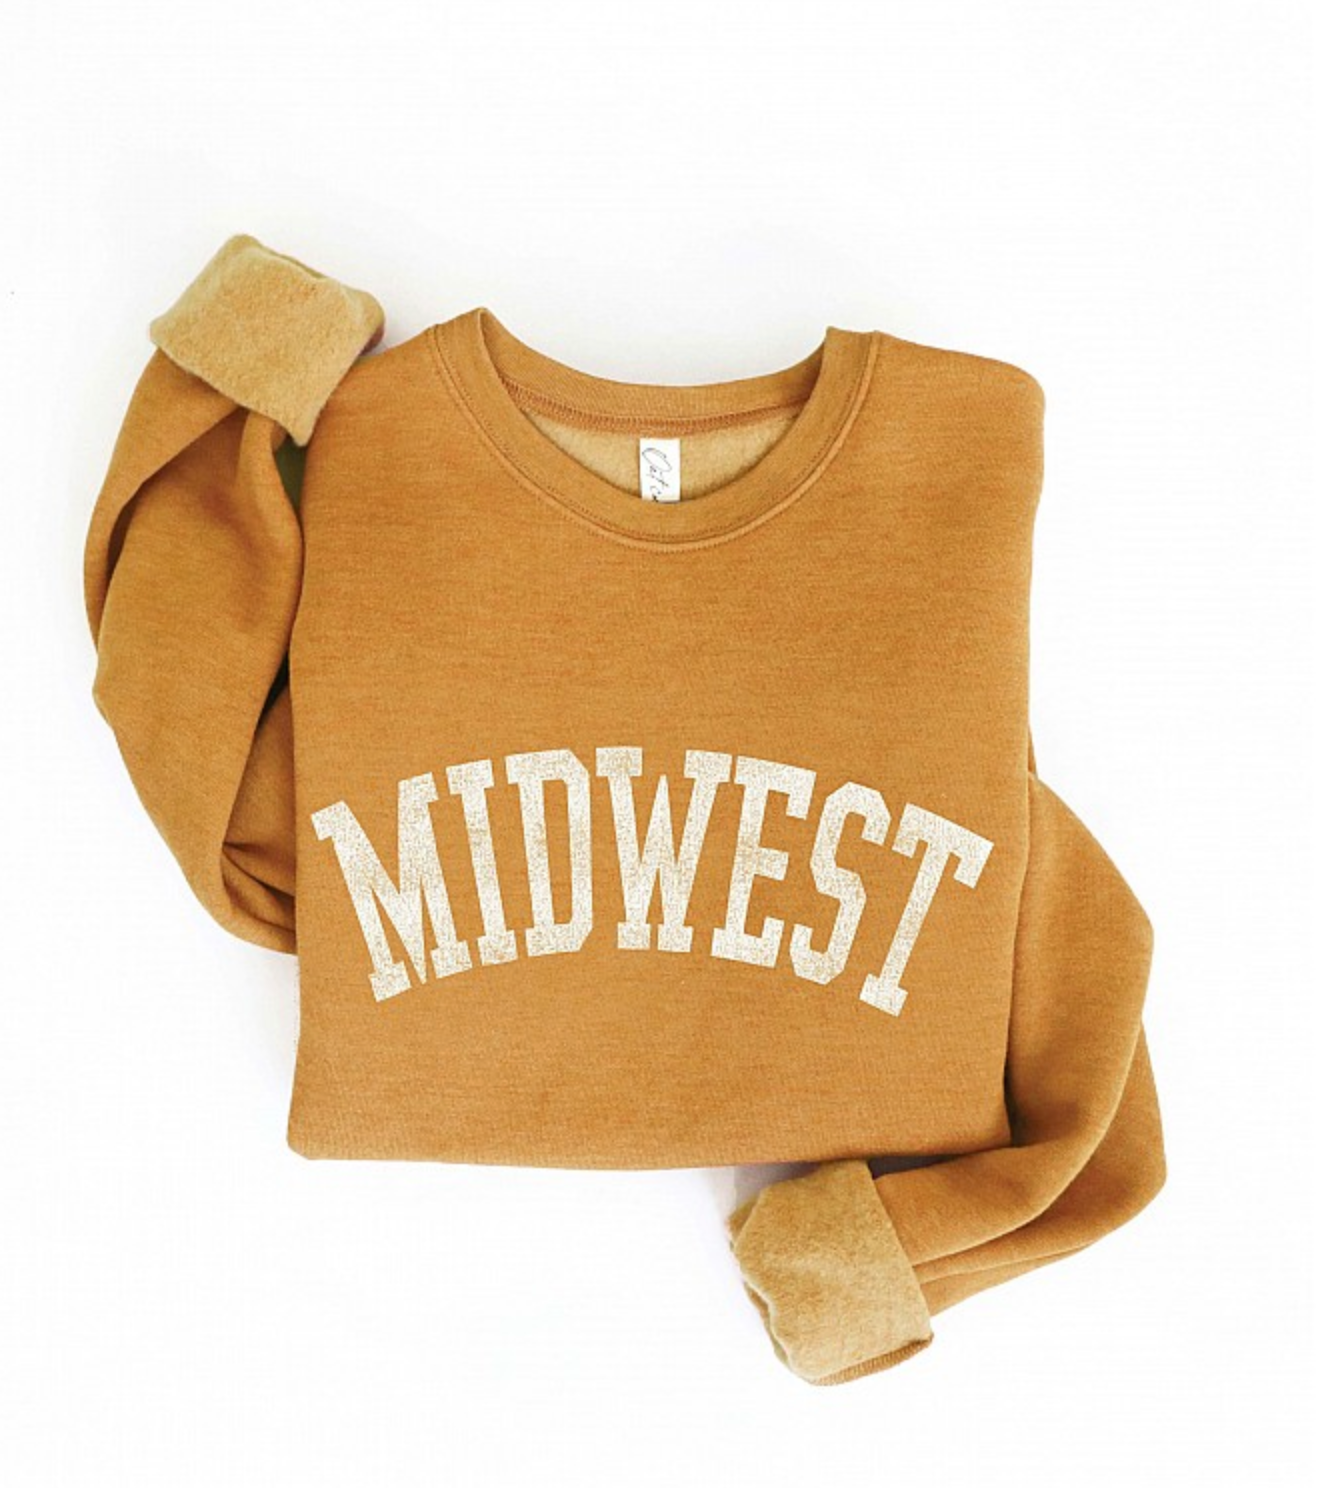 "Midwest" Graphic Sweatshirt